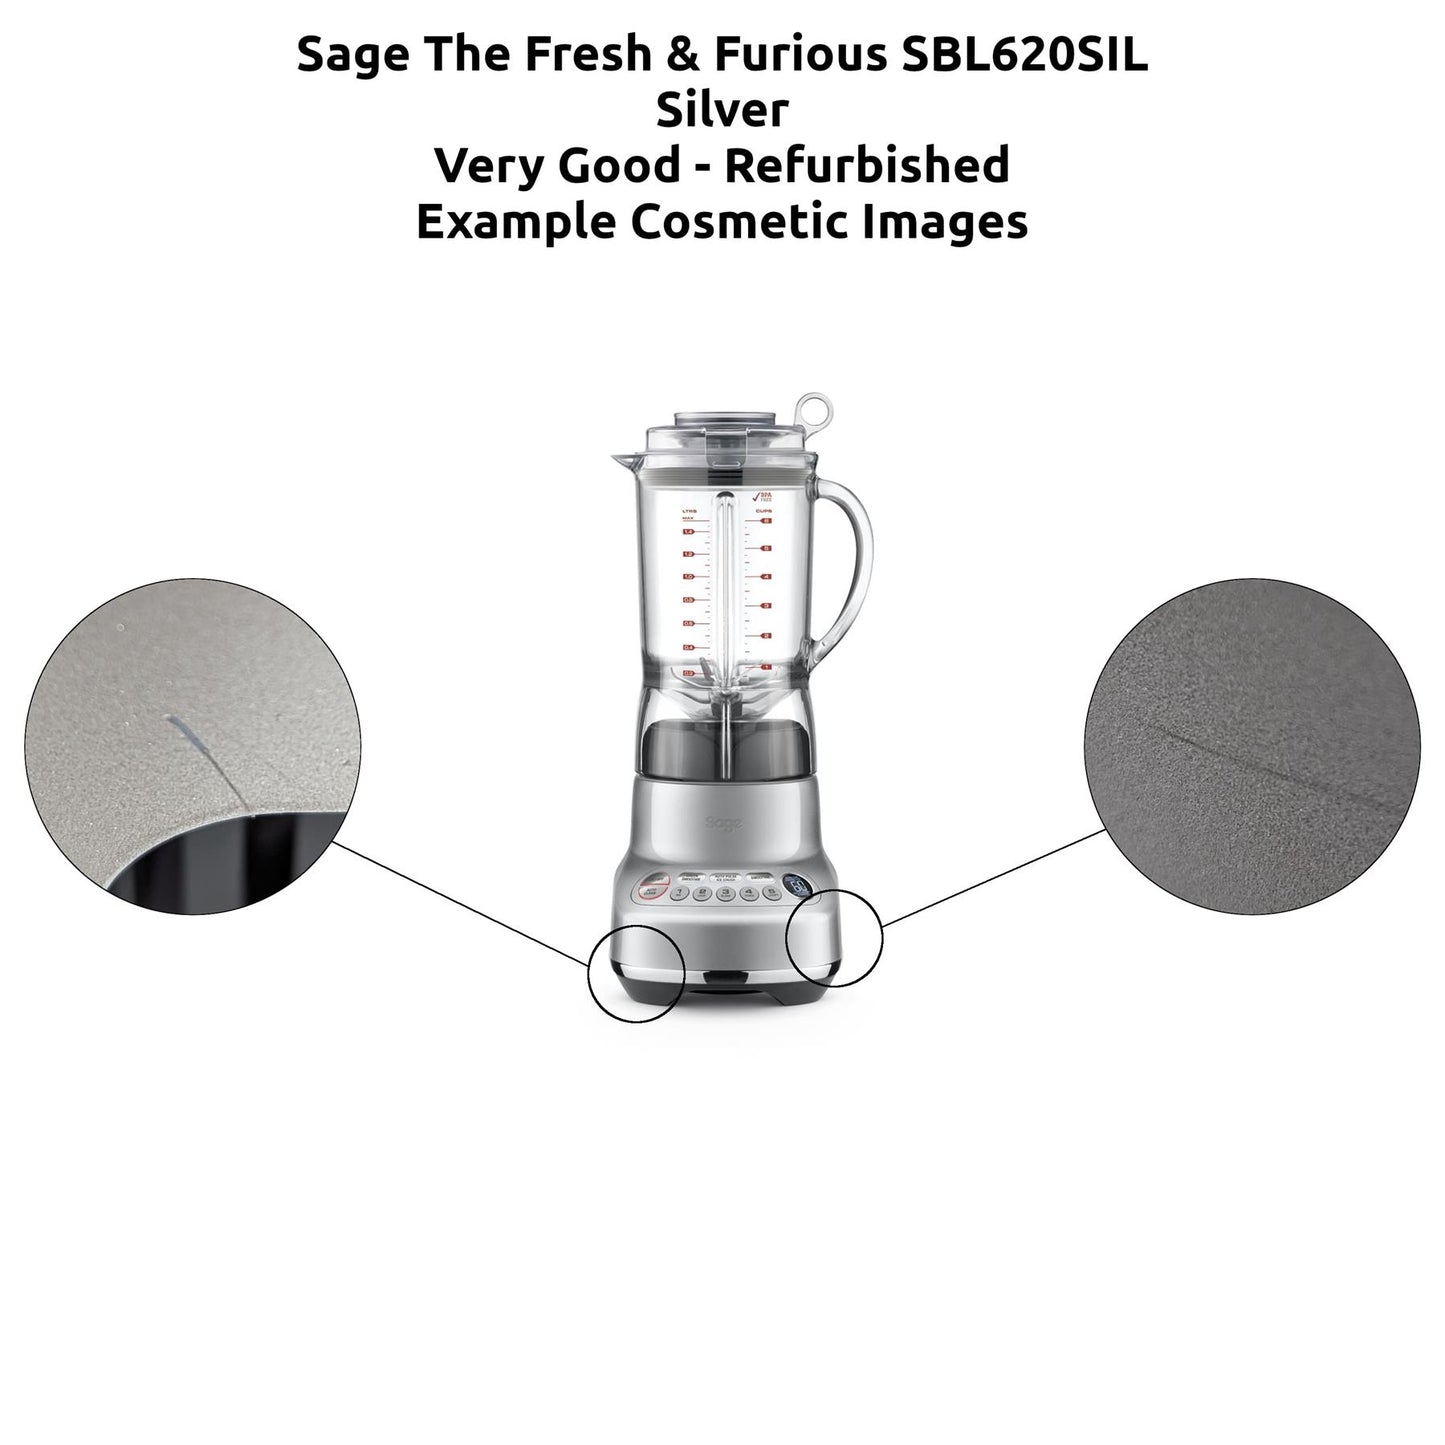 Sage The Fresh & Furious SBL620 Blender